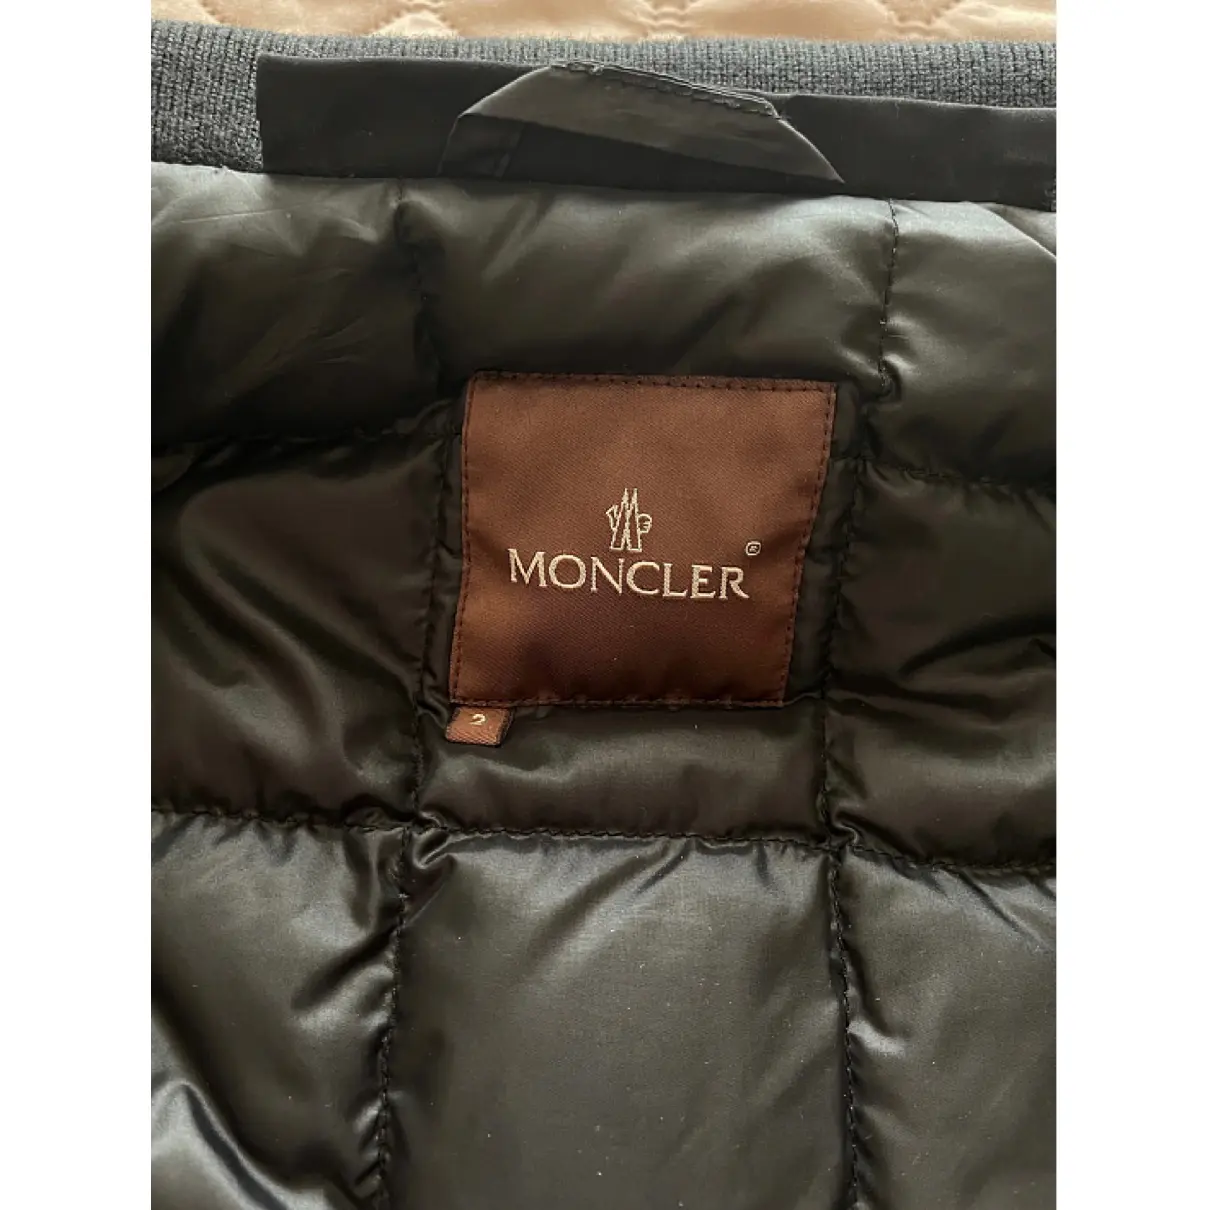 Buy Moncler Biker jacket online